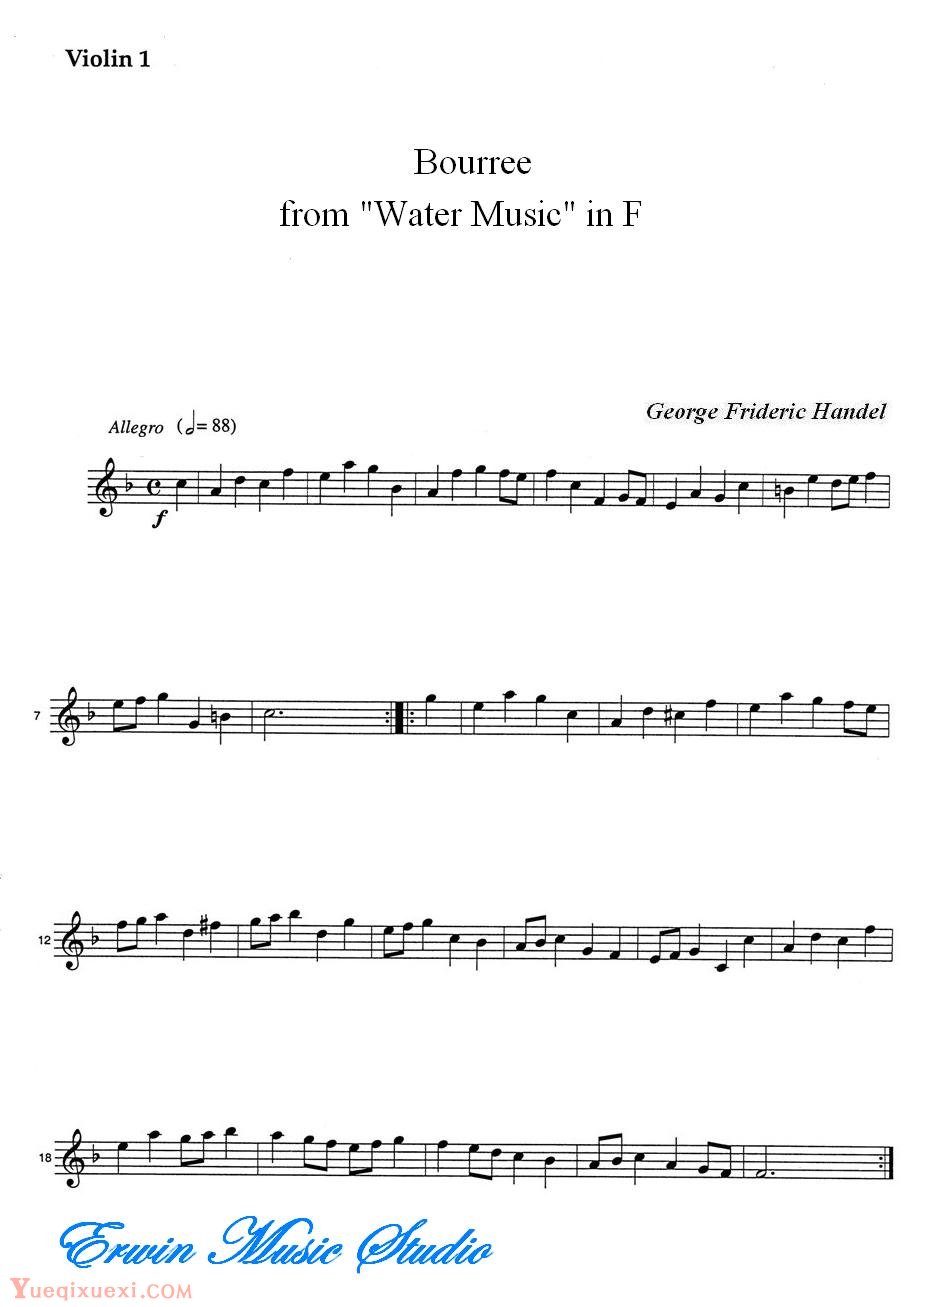 乔治 弗里德里克 亨德尔-步雷舞曲 选自F大调水上音乐弦乐三重Violin  George Frideric Handel,  Bourree from Water Music in F